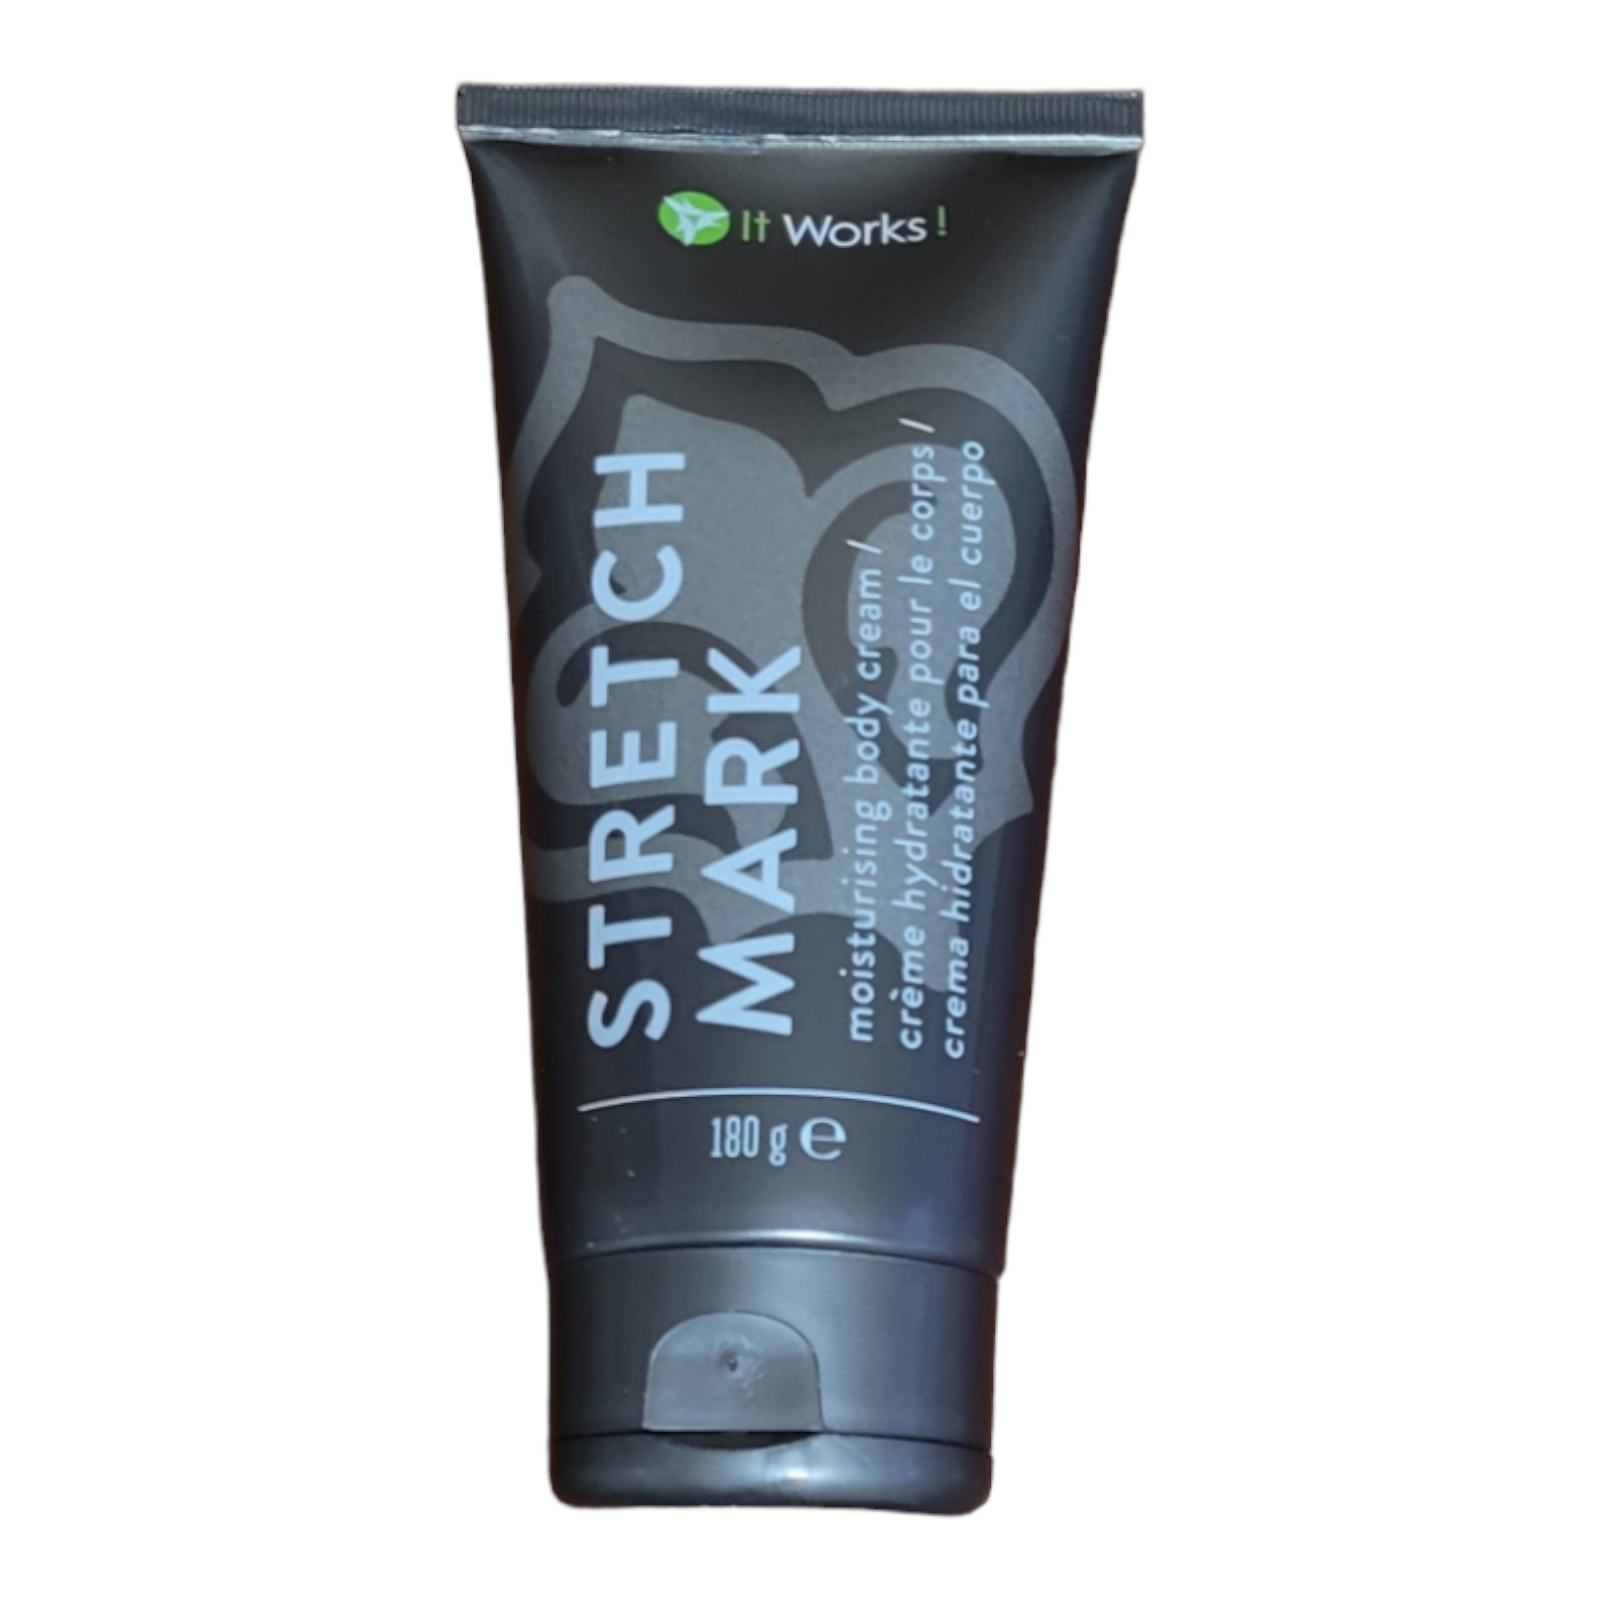 It Works! Stretch Mark Moisturising Body Cream (180 g) - New - Free Shipping - $75.00